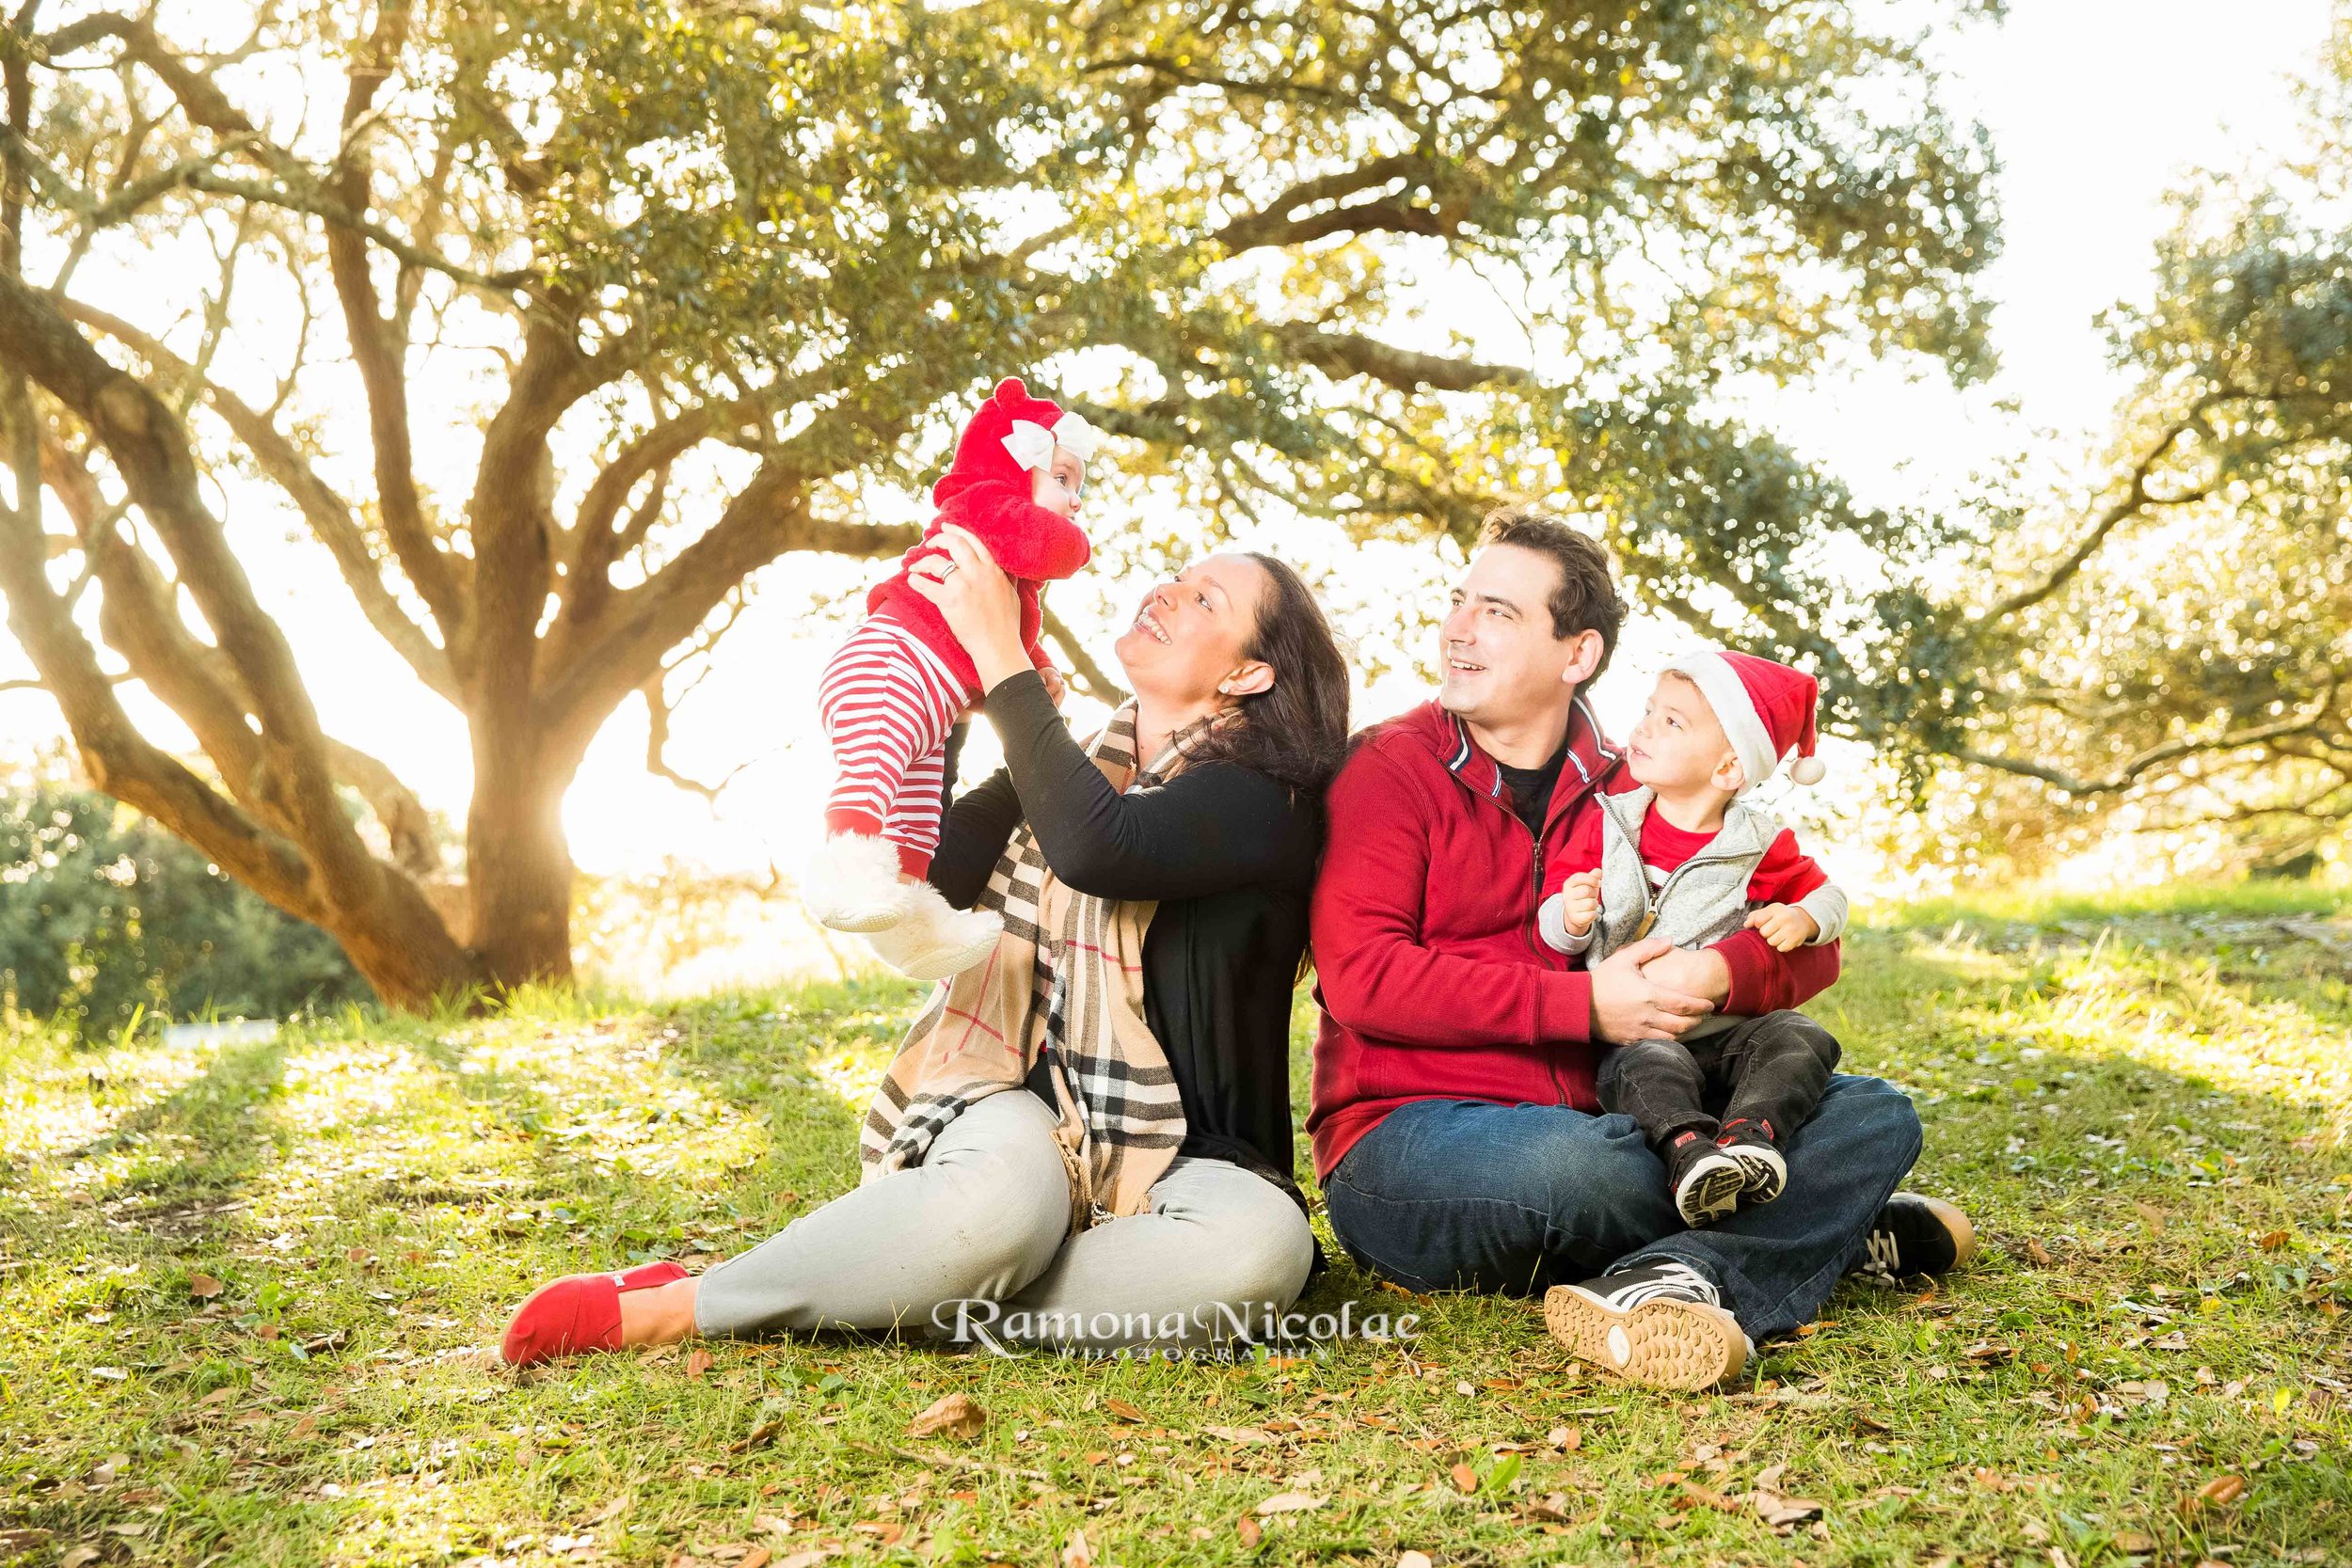 Top 15 Christmas Card Photoshoot Ideas for Families - TrickyPhotoshop